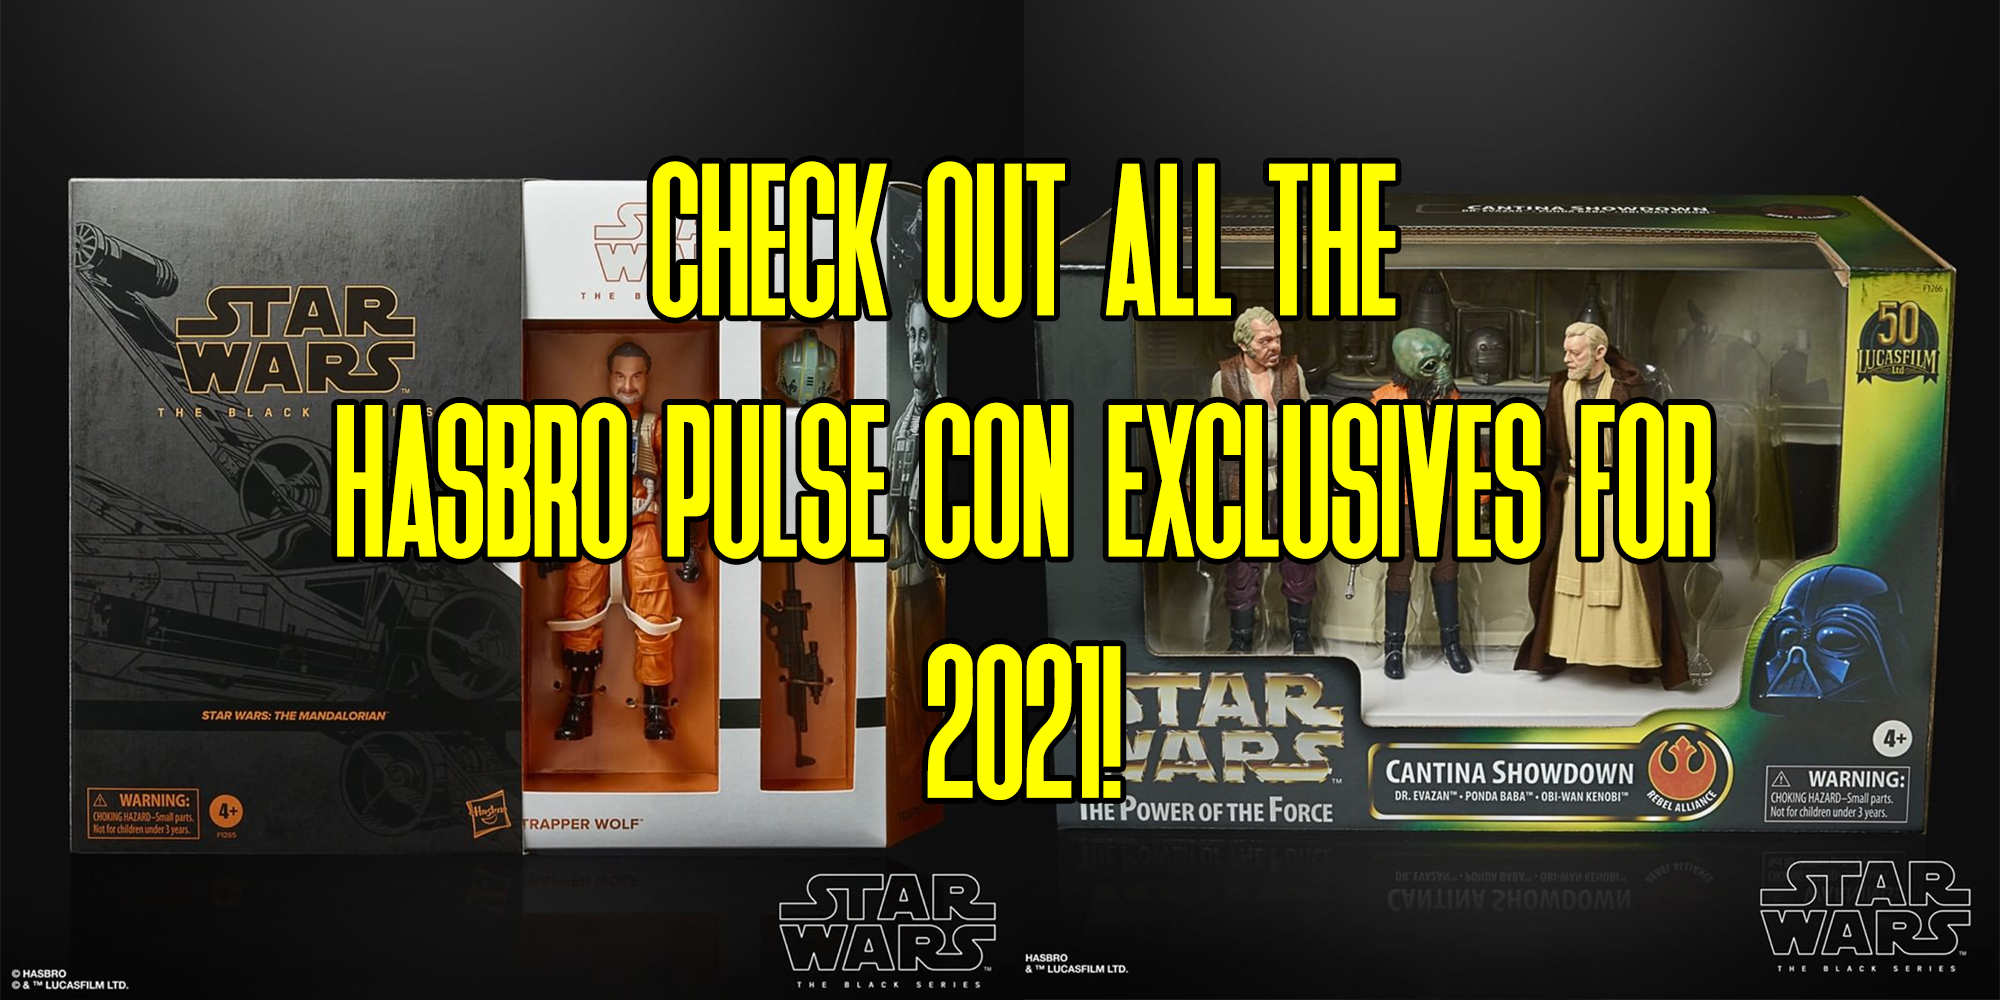 Hasbro Pulse Con 2021 Exclusives Revealed!